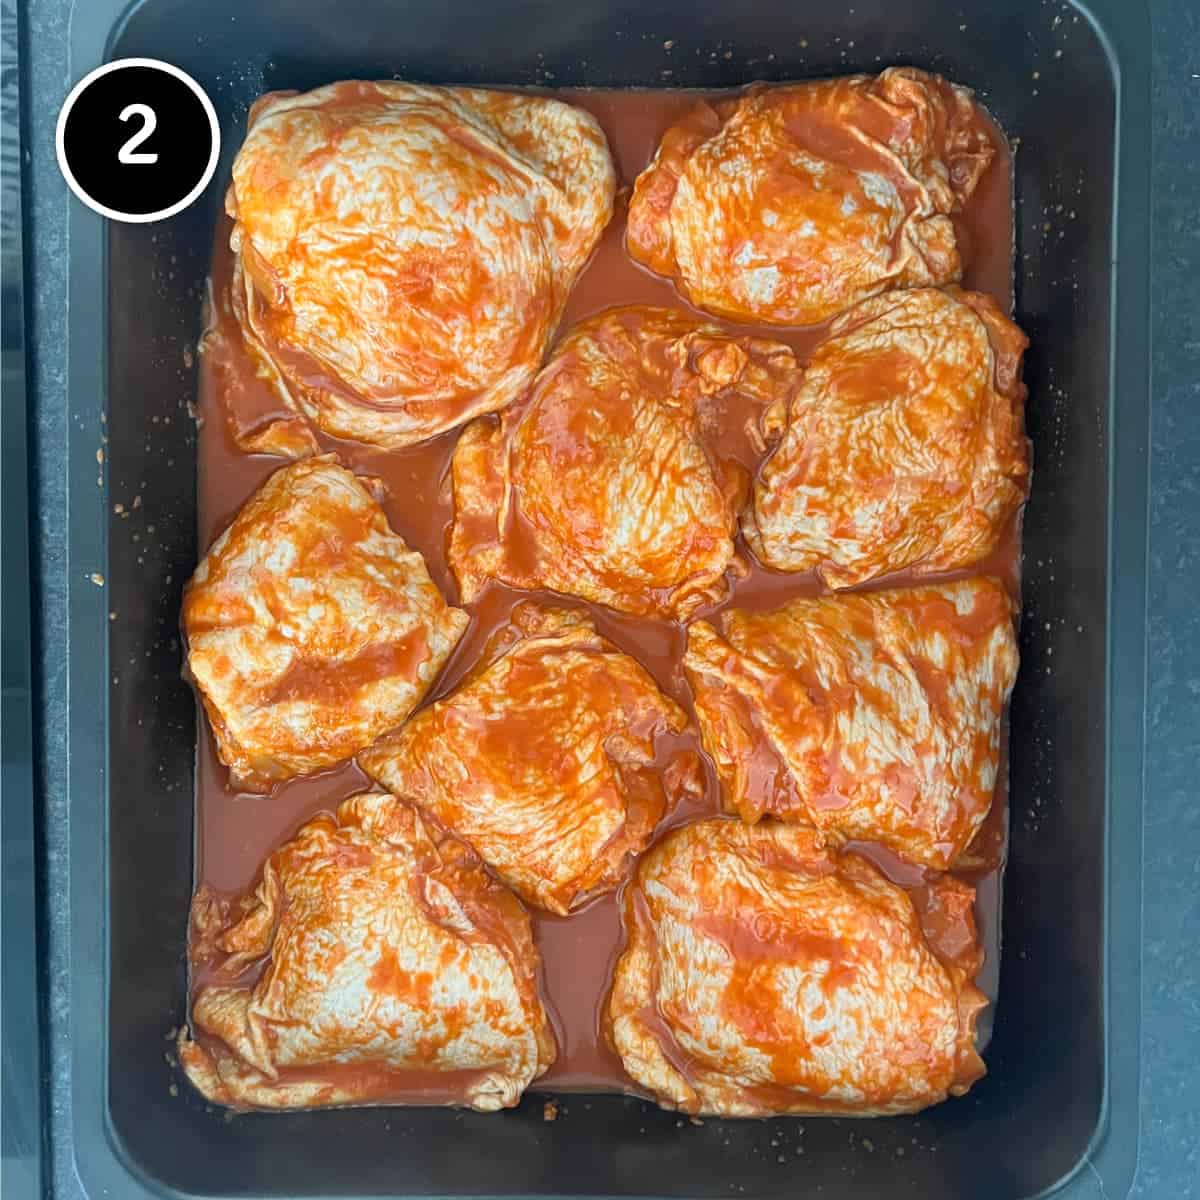 Placing the marinated gochujang chicken in a roasting tin.